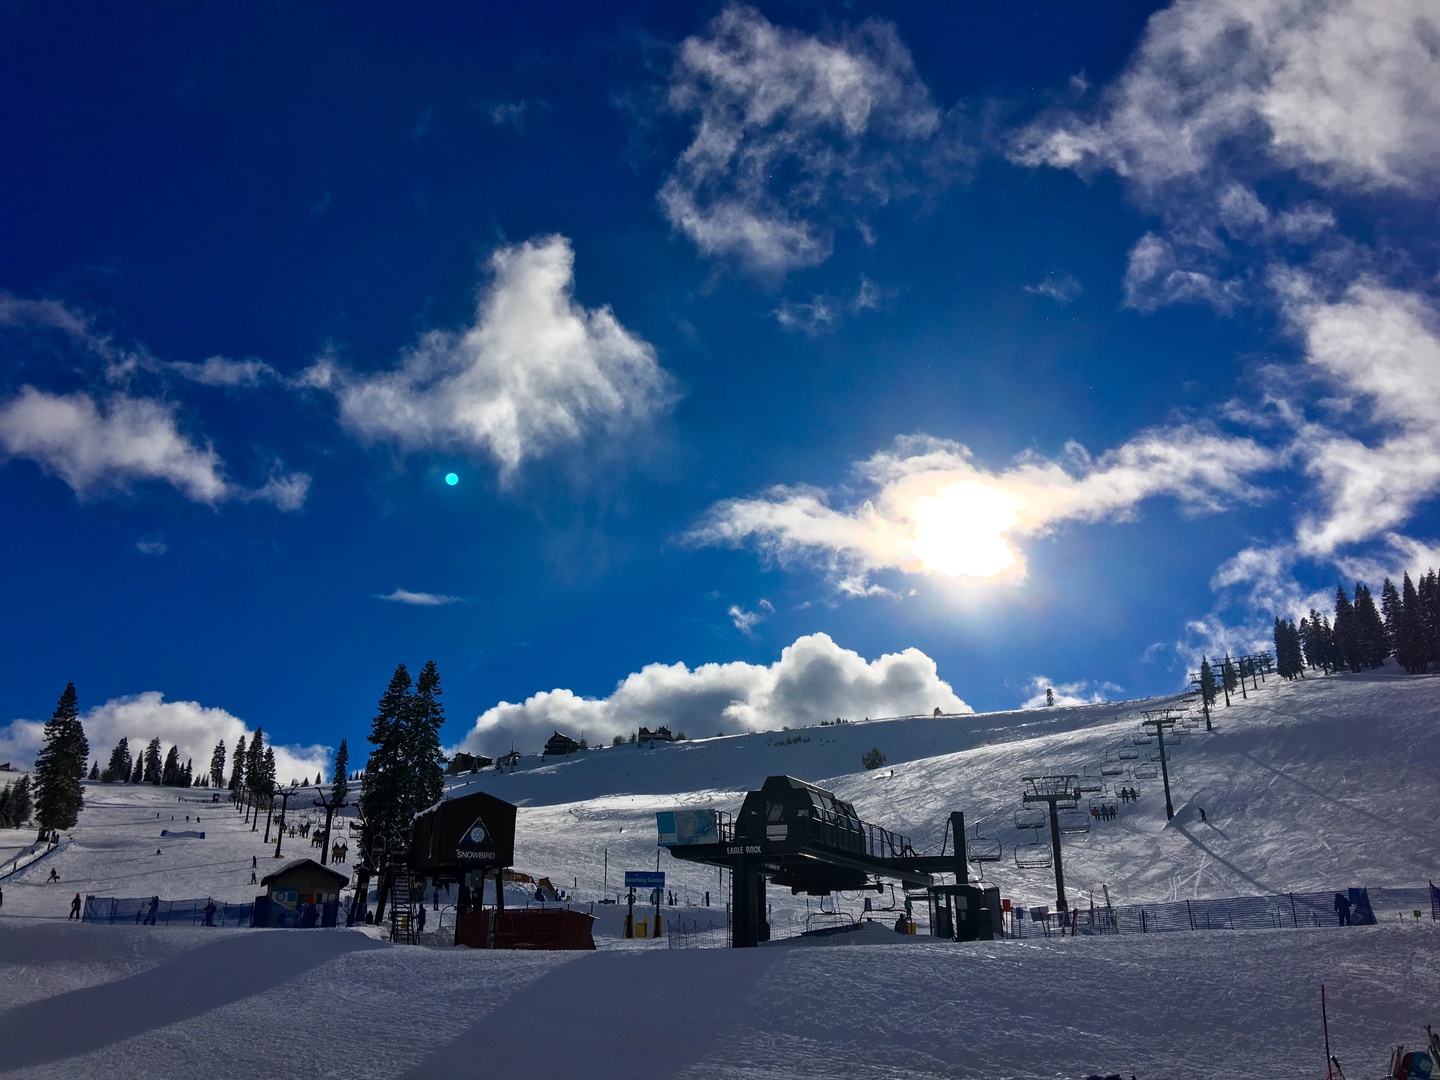 Tahoe Donner Ski Resort